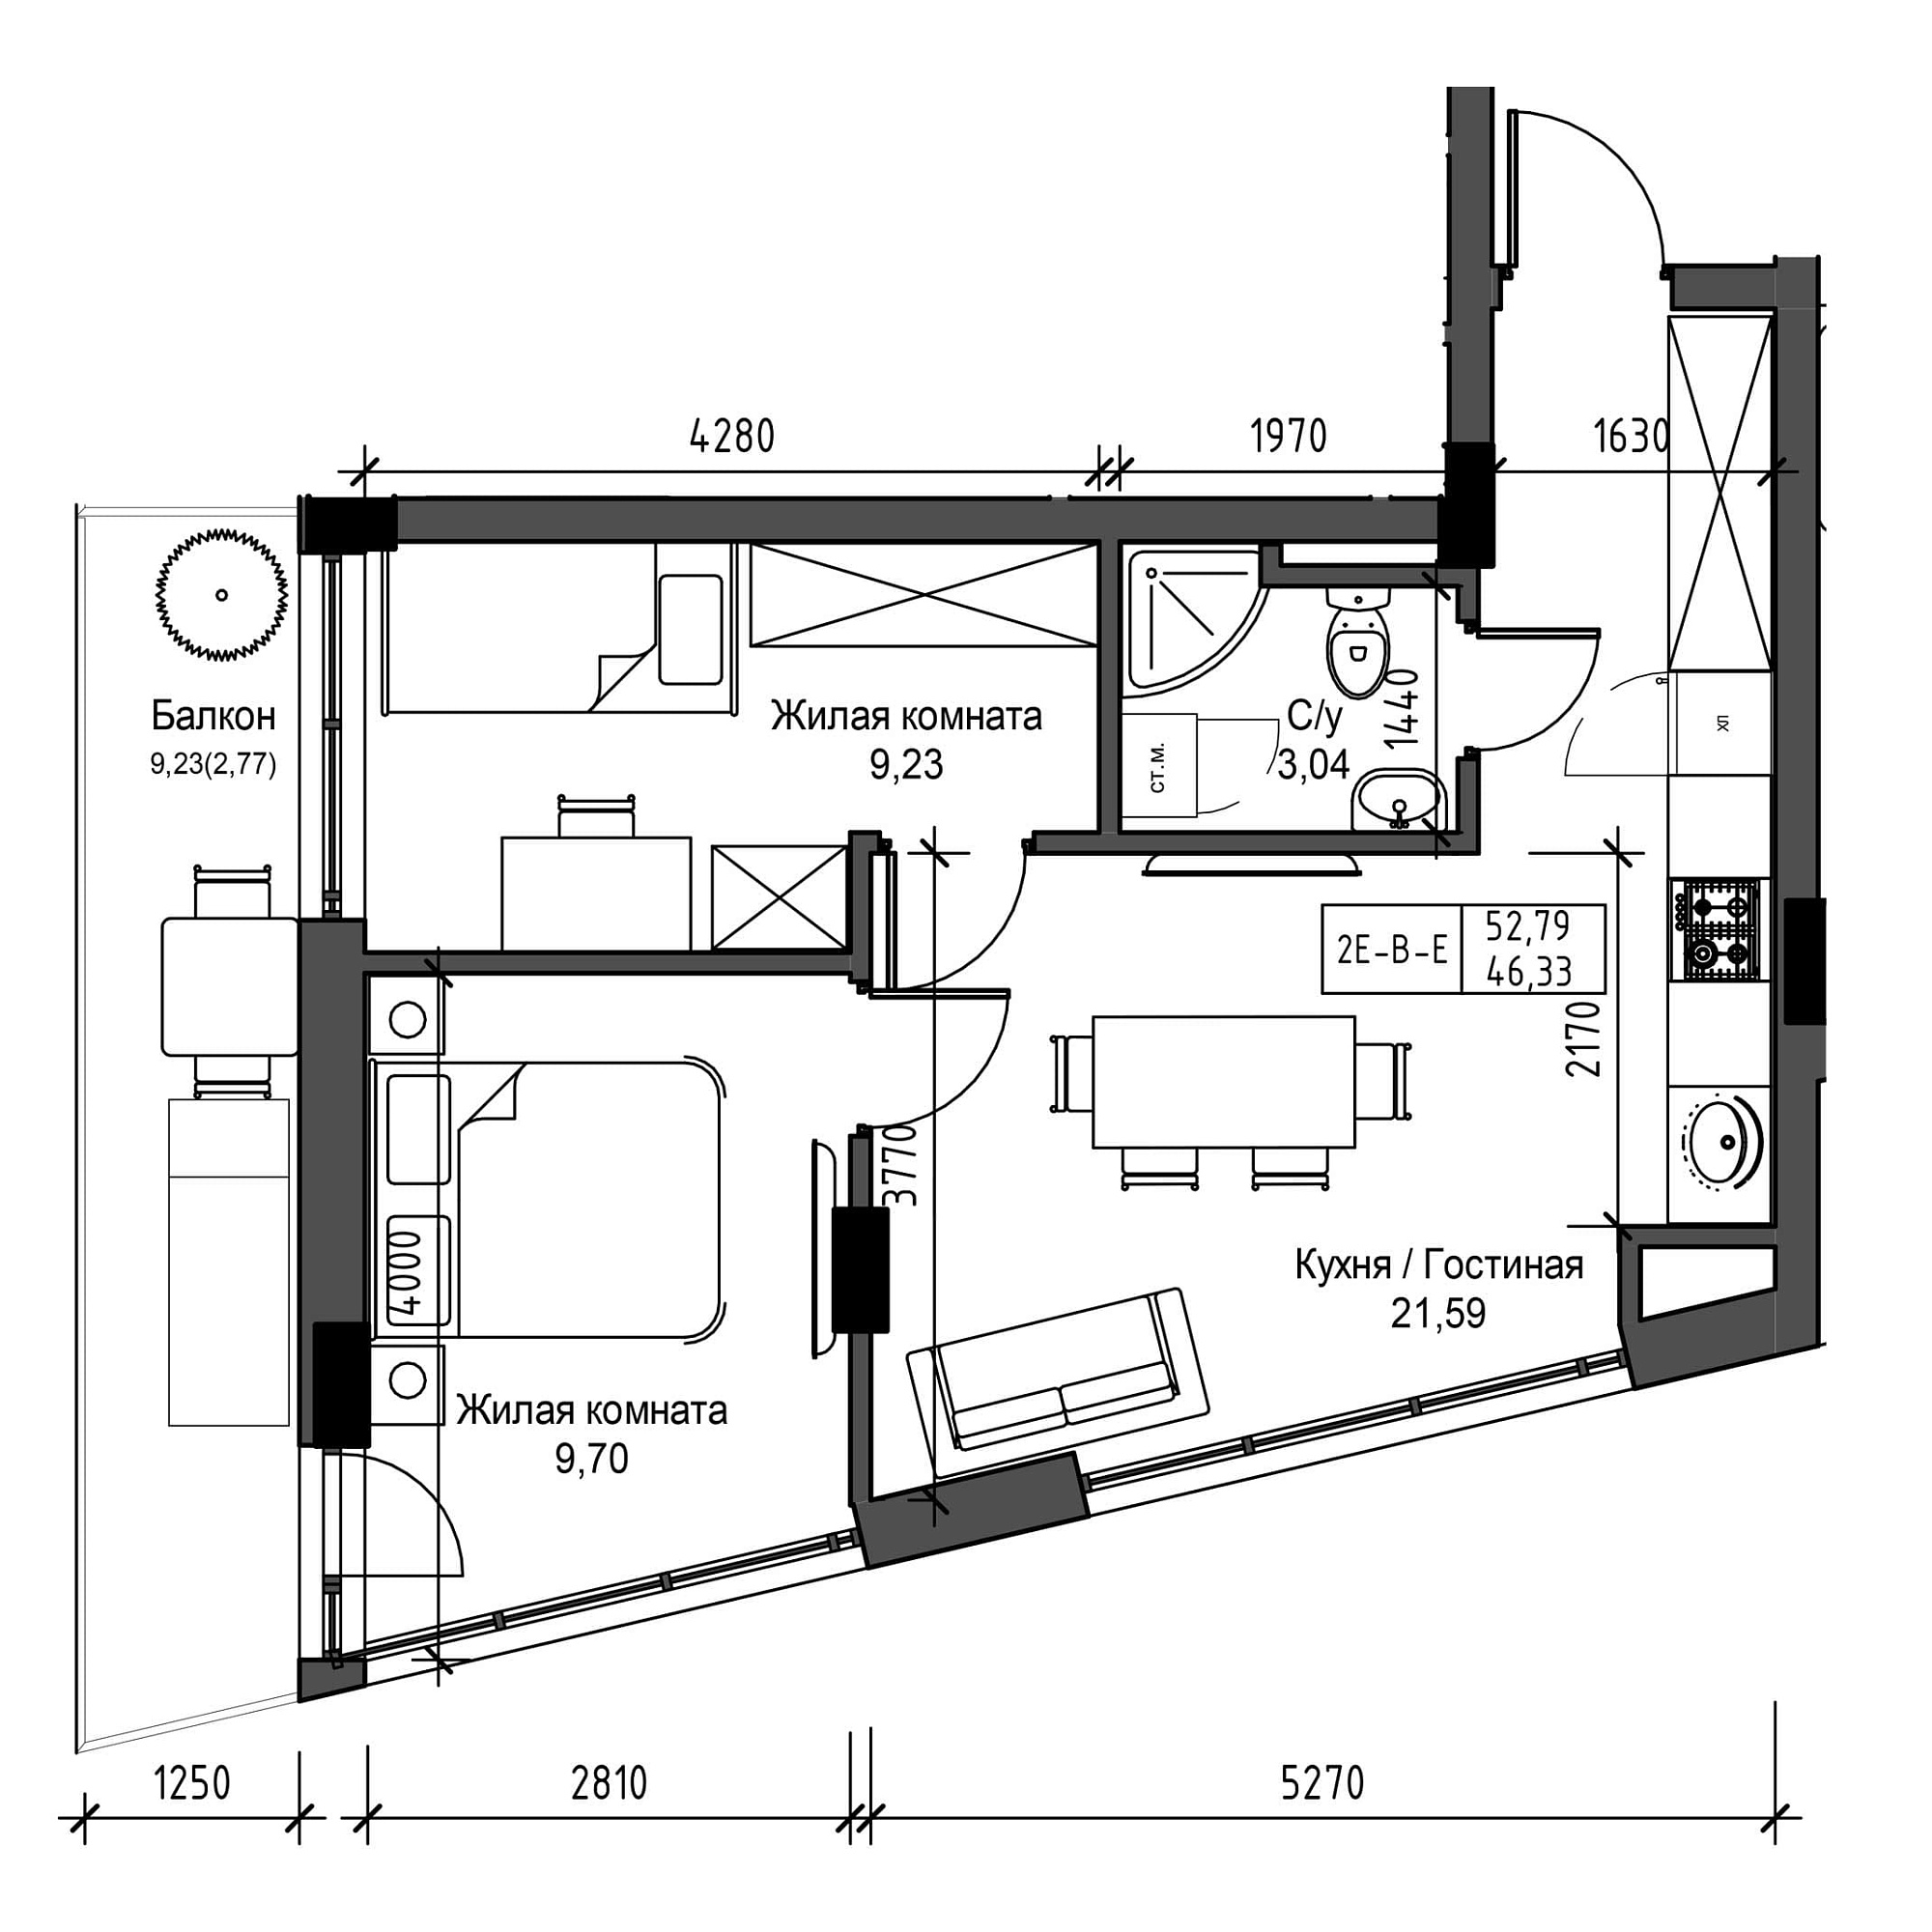 Планування 2-к квартира площею 46.33м2, UM-001-06/0009.